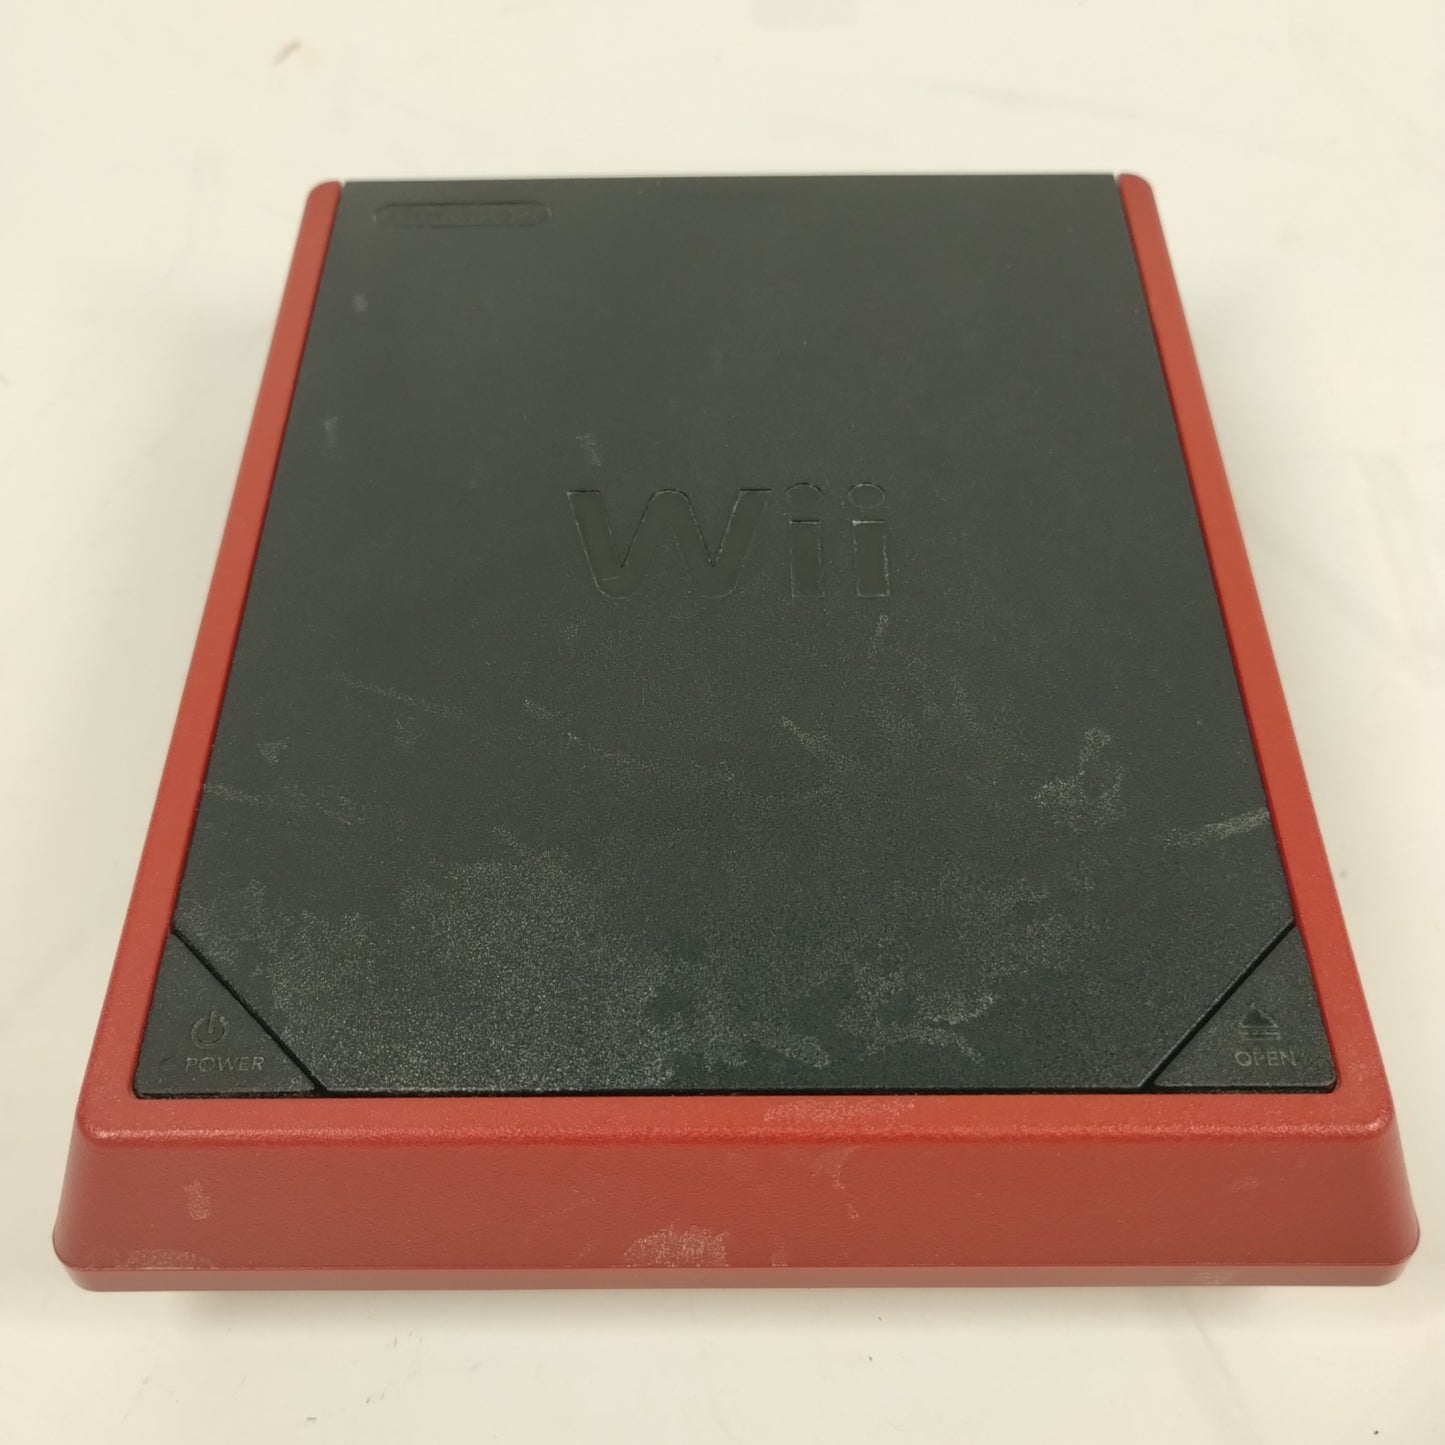 Nintendo Wii Mini Video Game Console RVL-201 Red